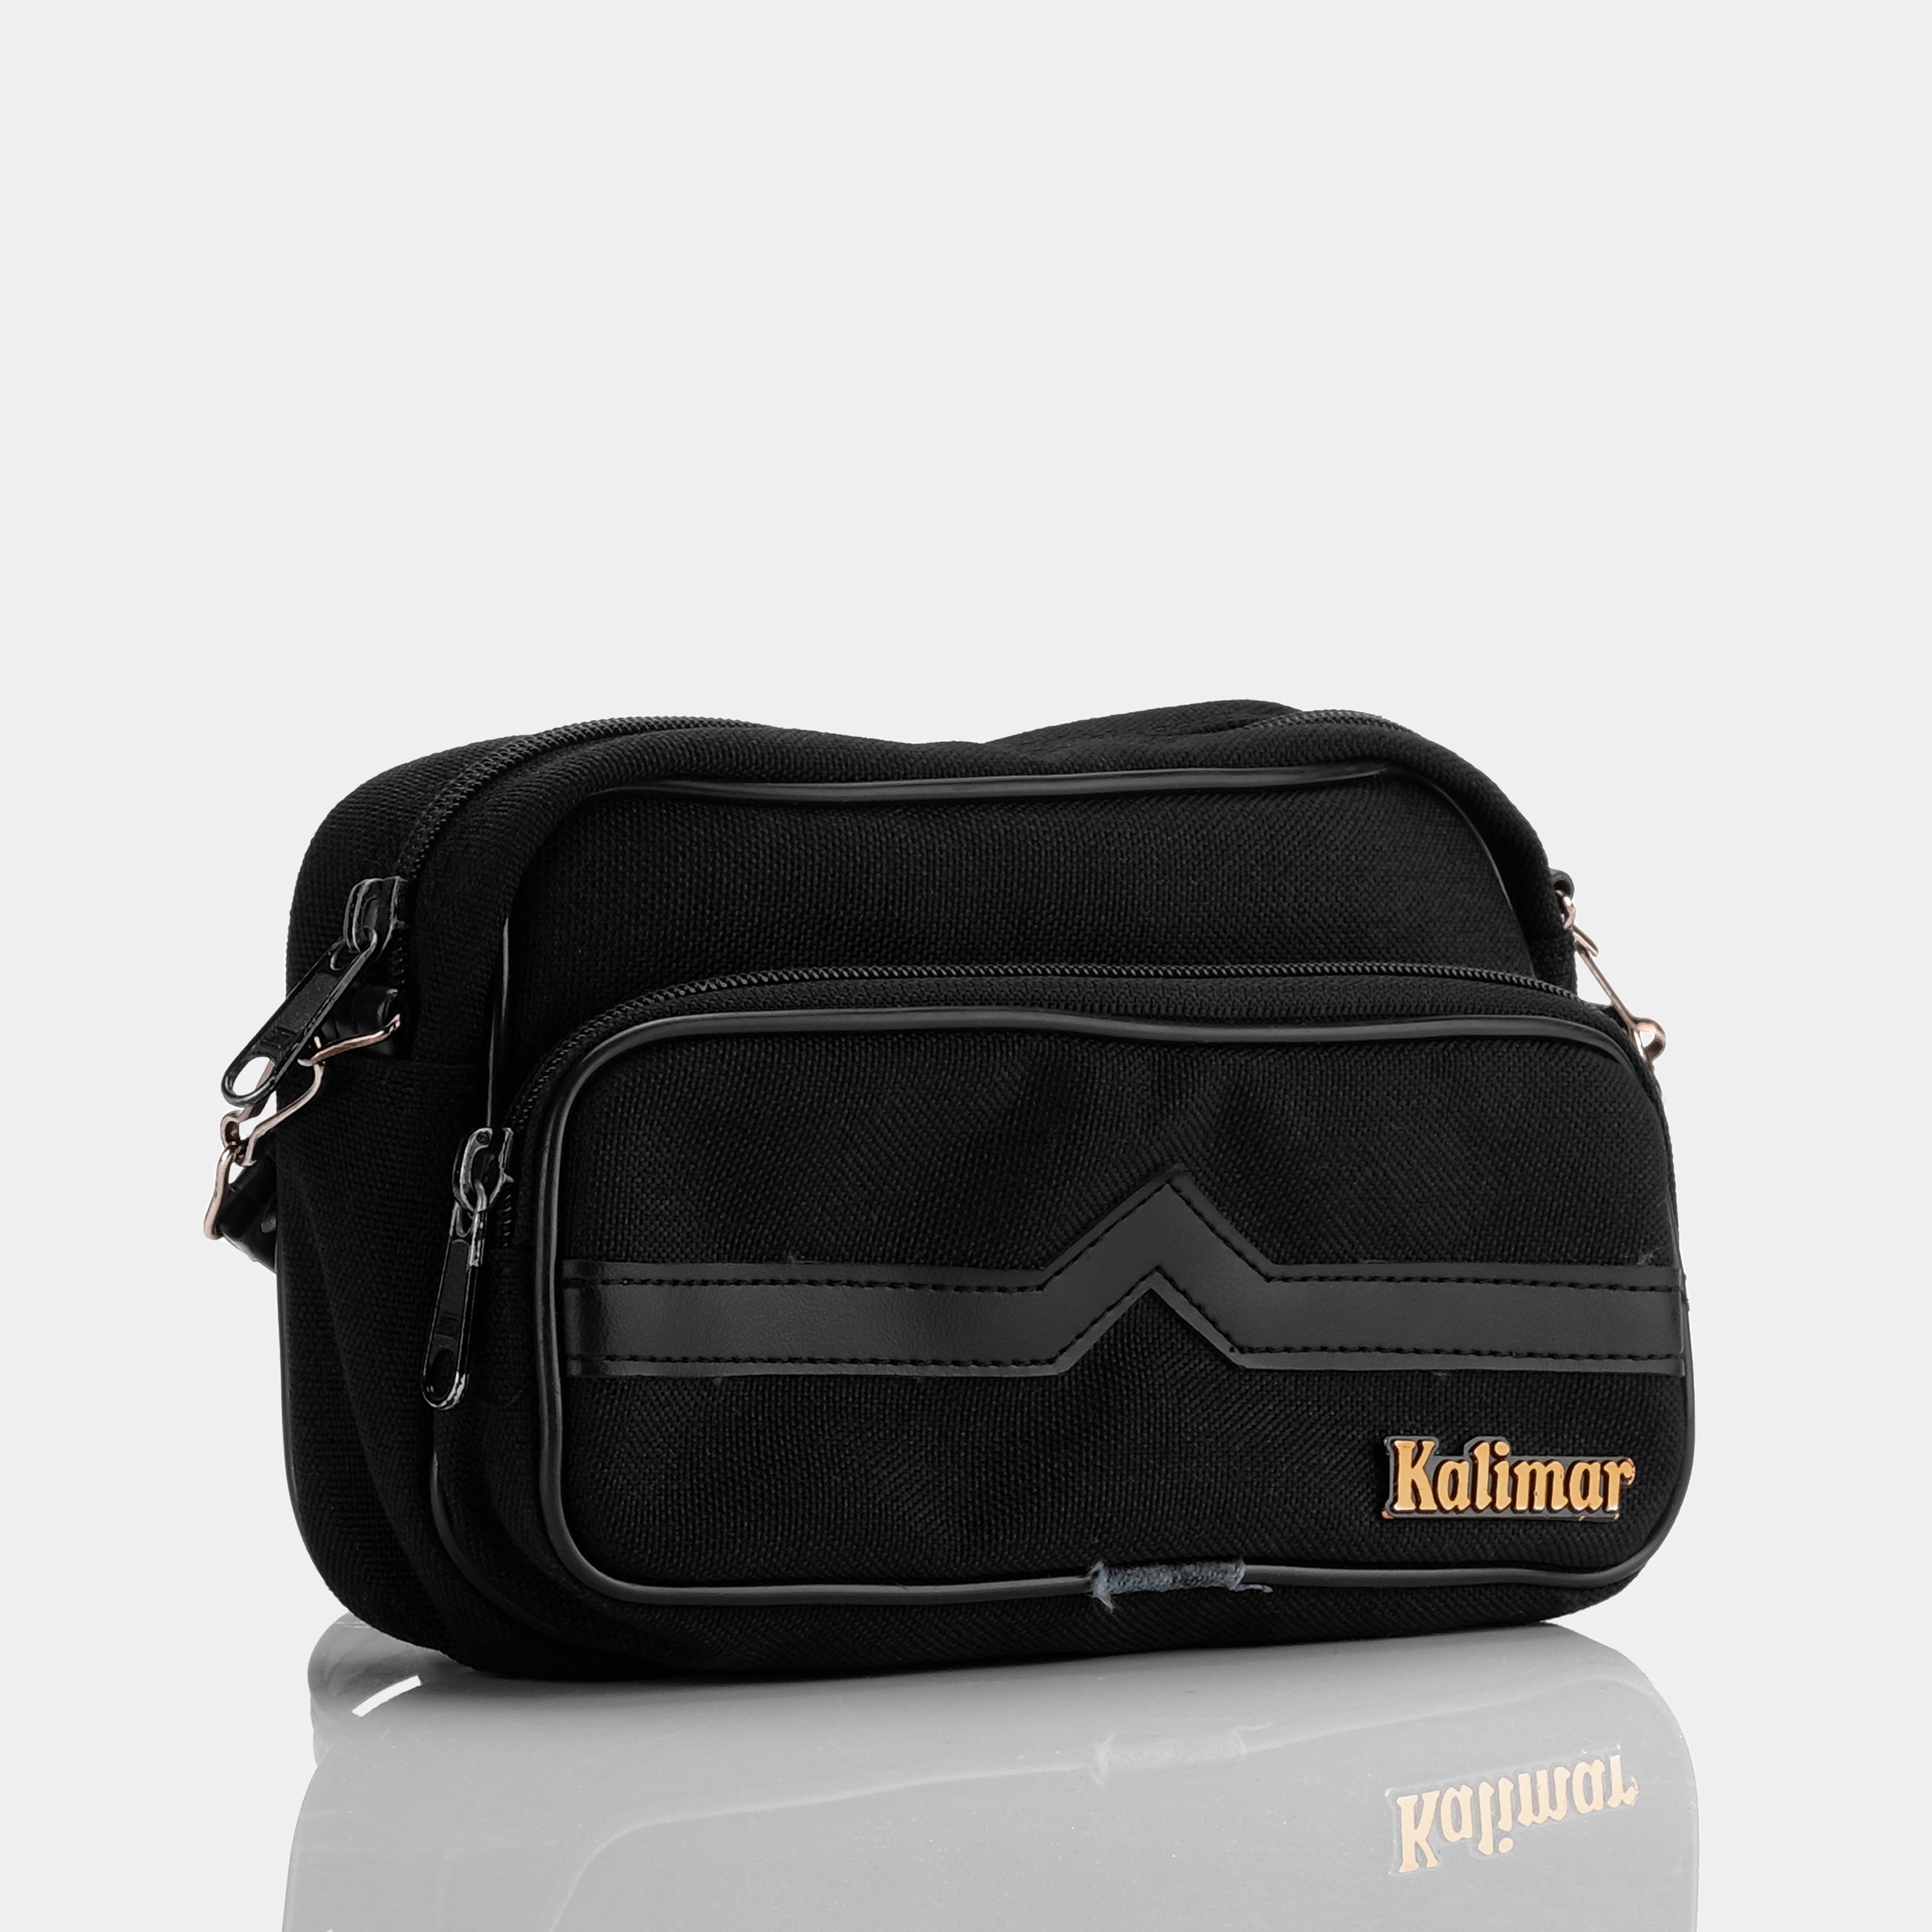 Kalimar Black Camera Bag